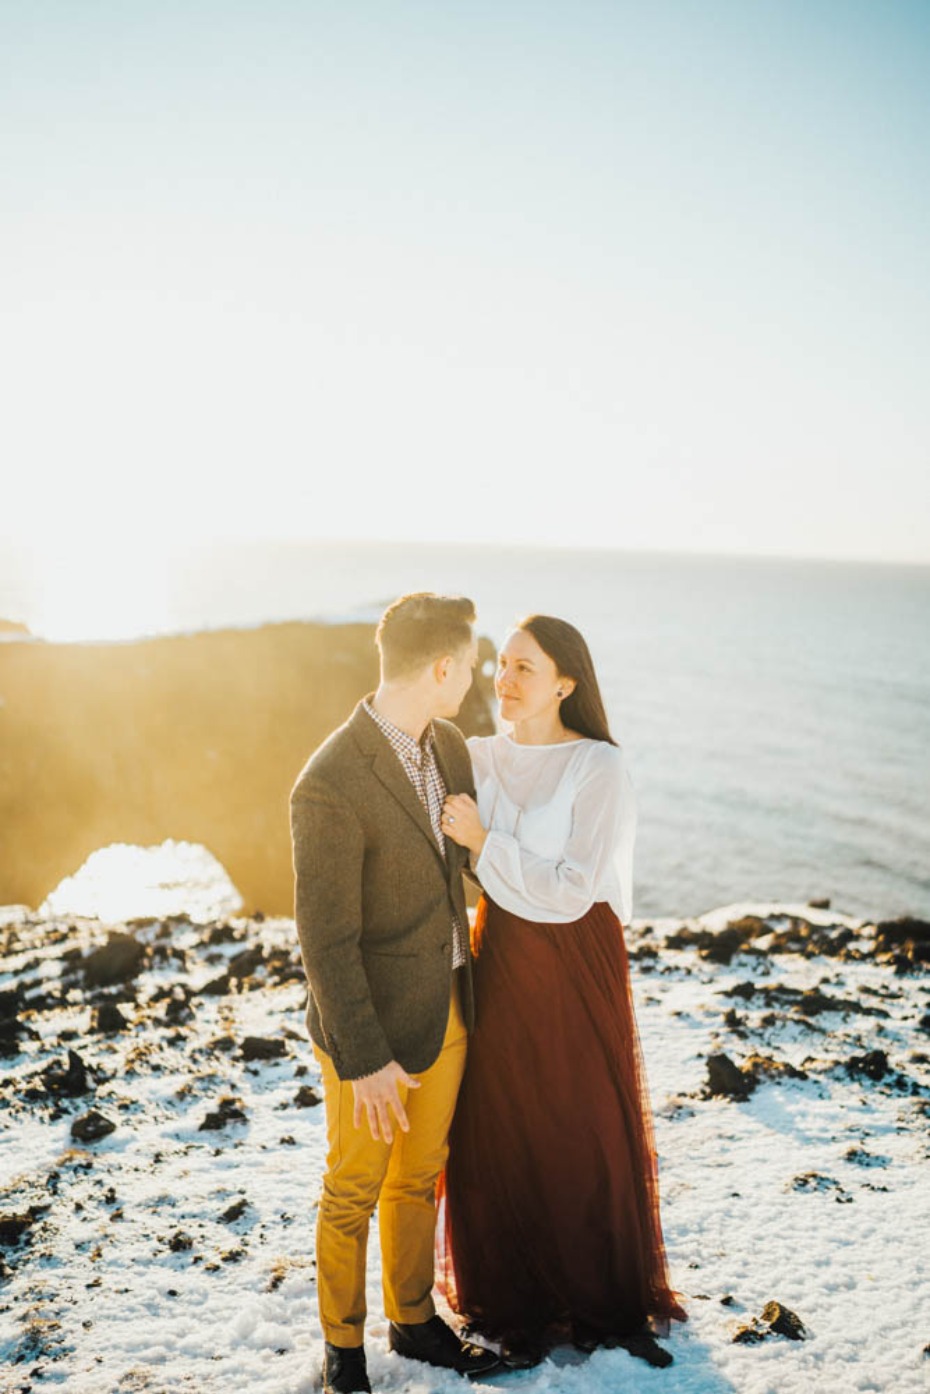 Get eloped in Iceland